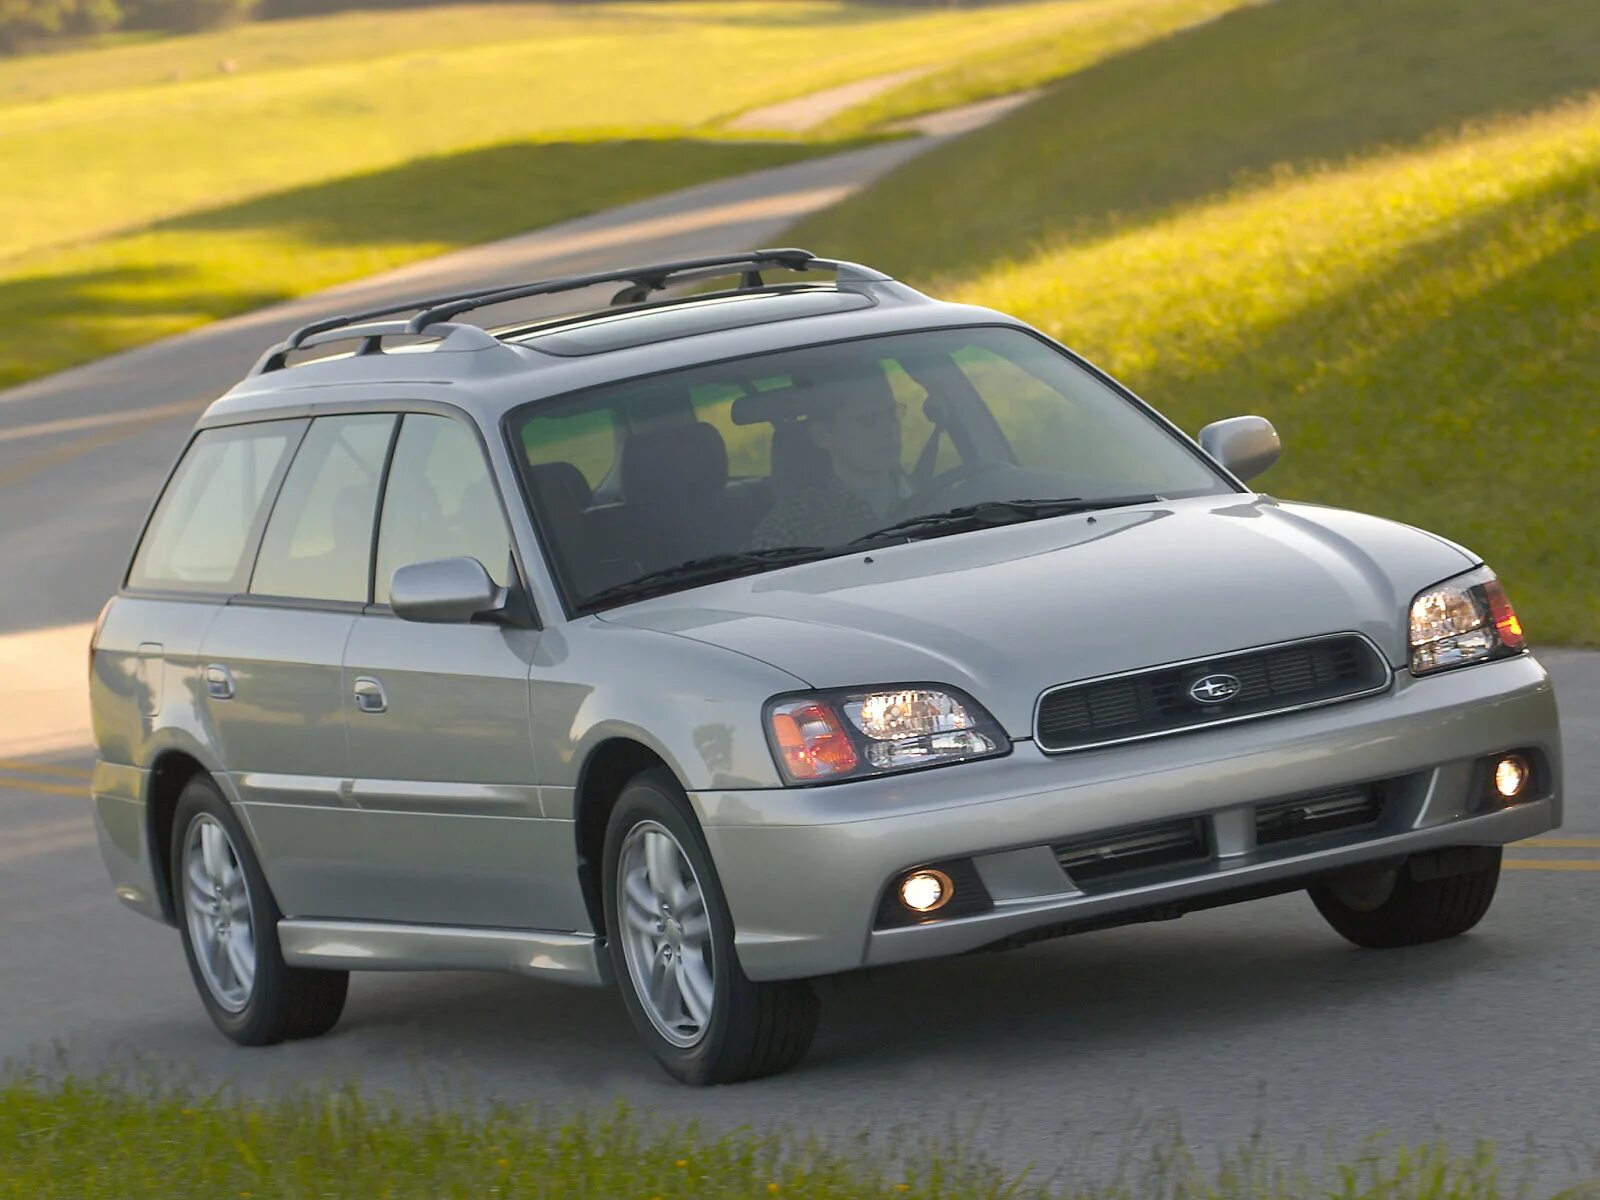 Subaru legacy 2. Subaru Legacy 2000 универсал. 1998 Subaru Legacy Wagon. Субару Легаси 2000 универсал 2.5. Subaru Legacy, 2000 BH универсал.